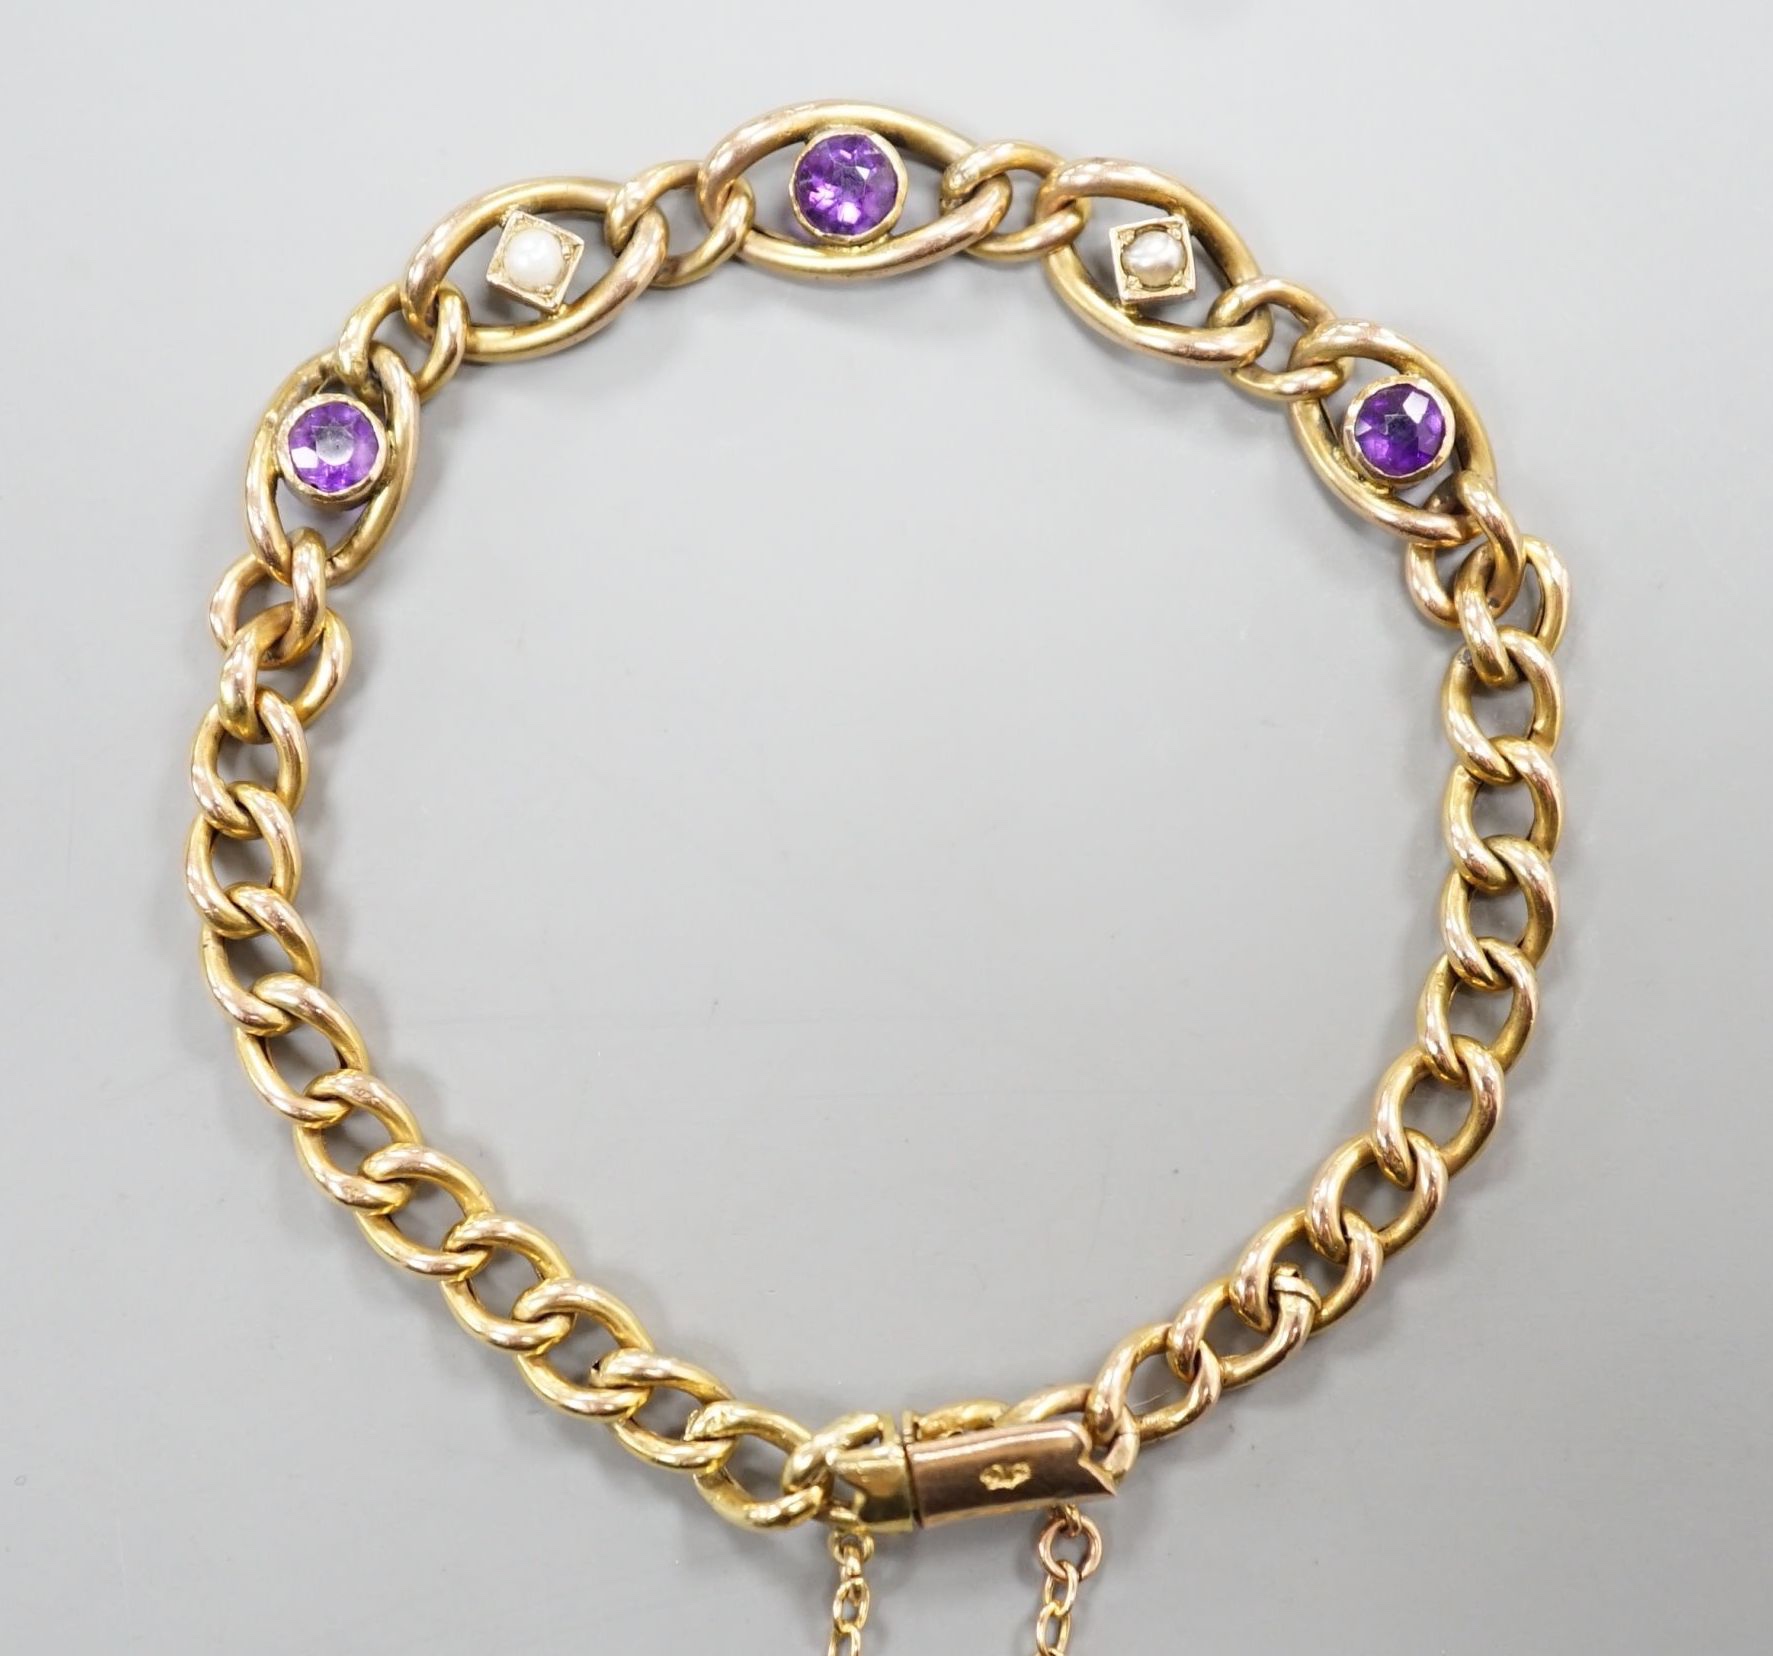 An Edwardian 9ct, amethyst and seed pearl set bracelet, 18cm, 6.1 grams.